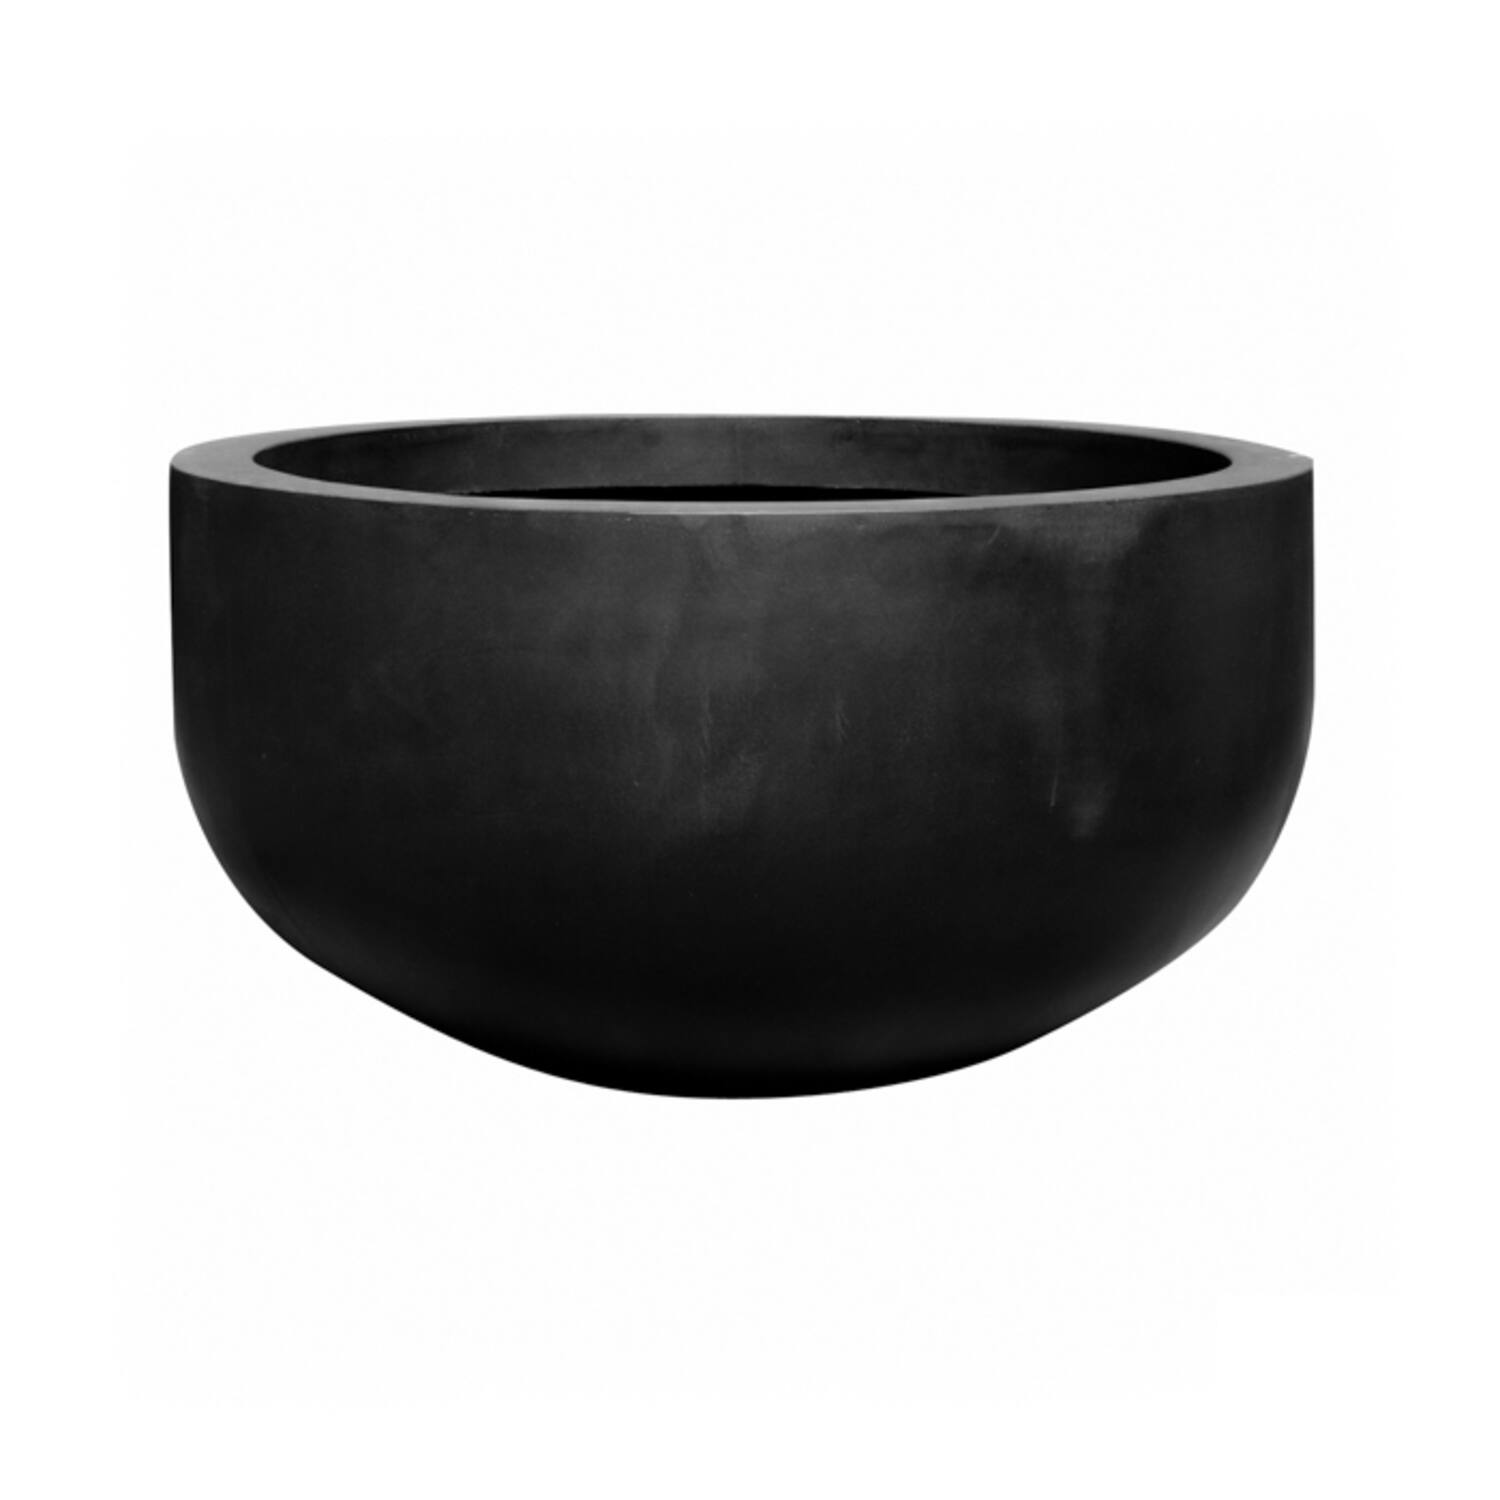 City bowl L, Black (E1165-S1-01), pottery | Shop - Pottery Pots US